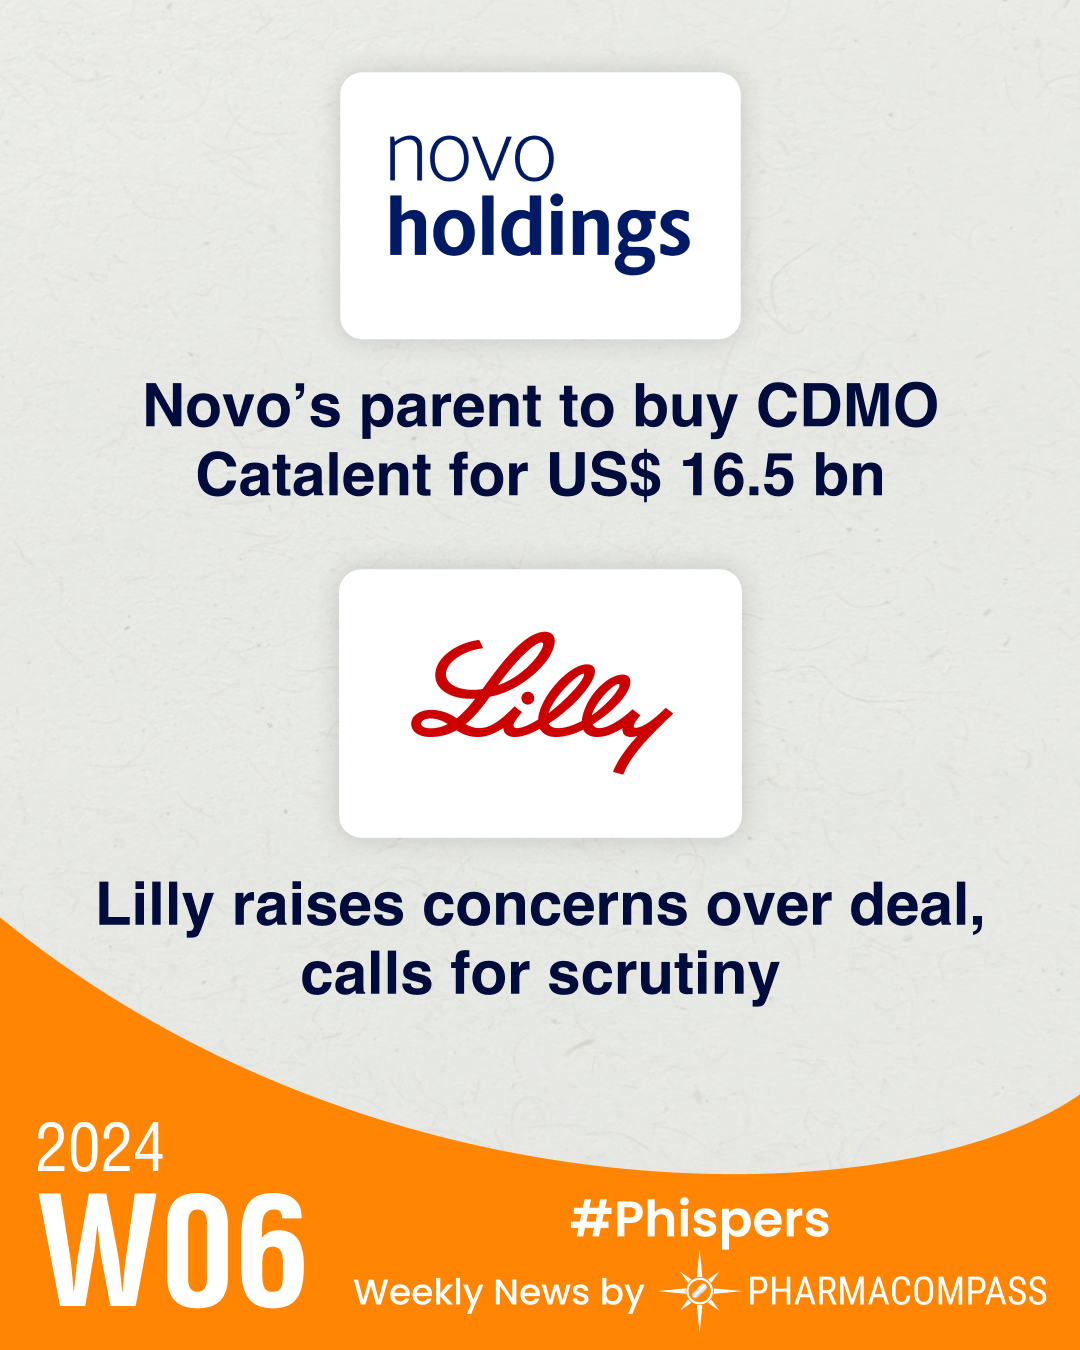 Novo’s parent buys Catalent for US$ 16.5 bn, Lilly calls for scrutiny; Novartis acquires MorphoSys